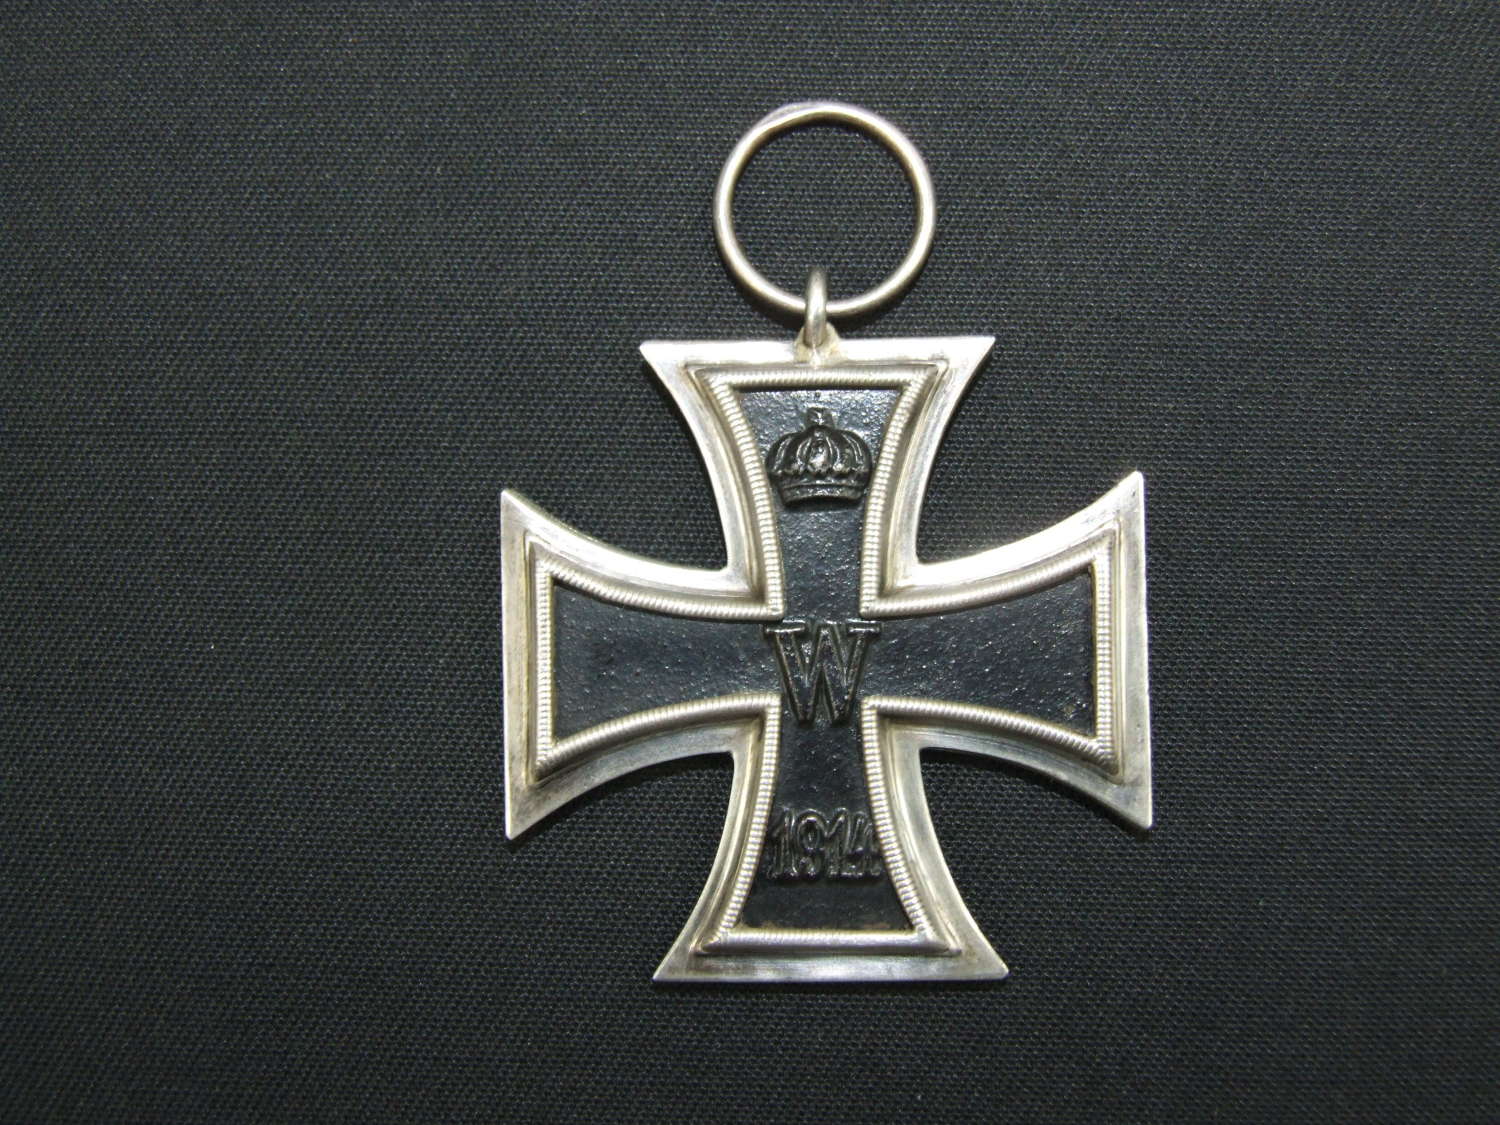 1914 Iron Cross 2nd Class. Virtually Mint Condition